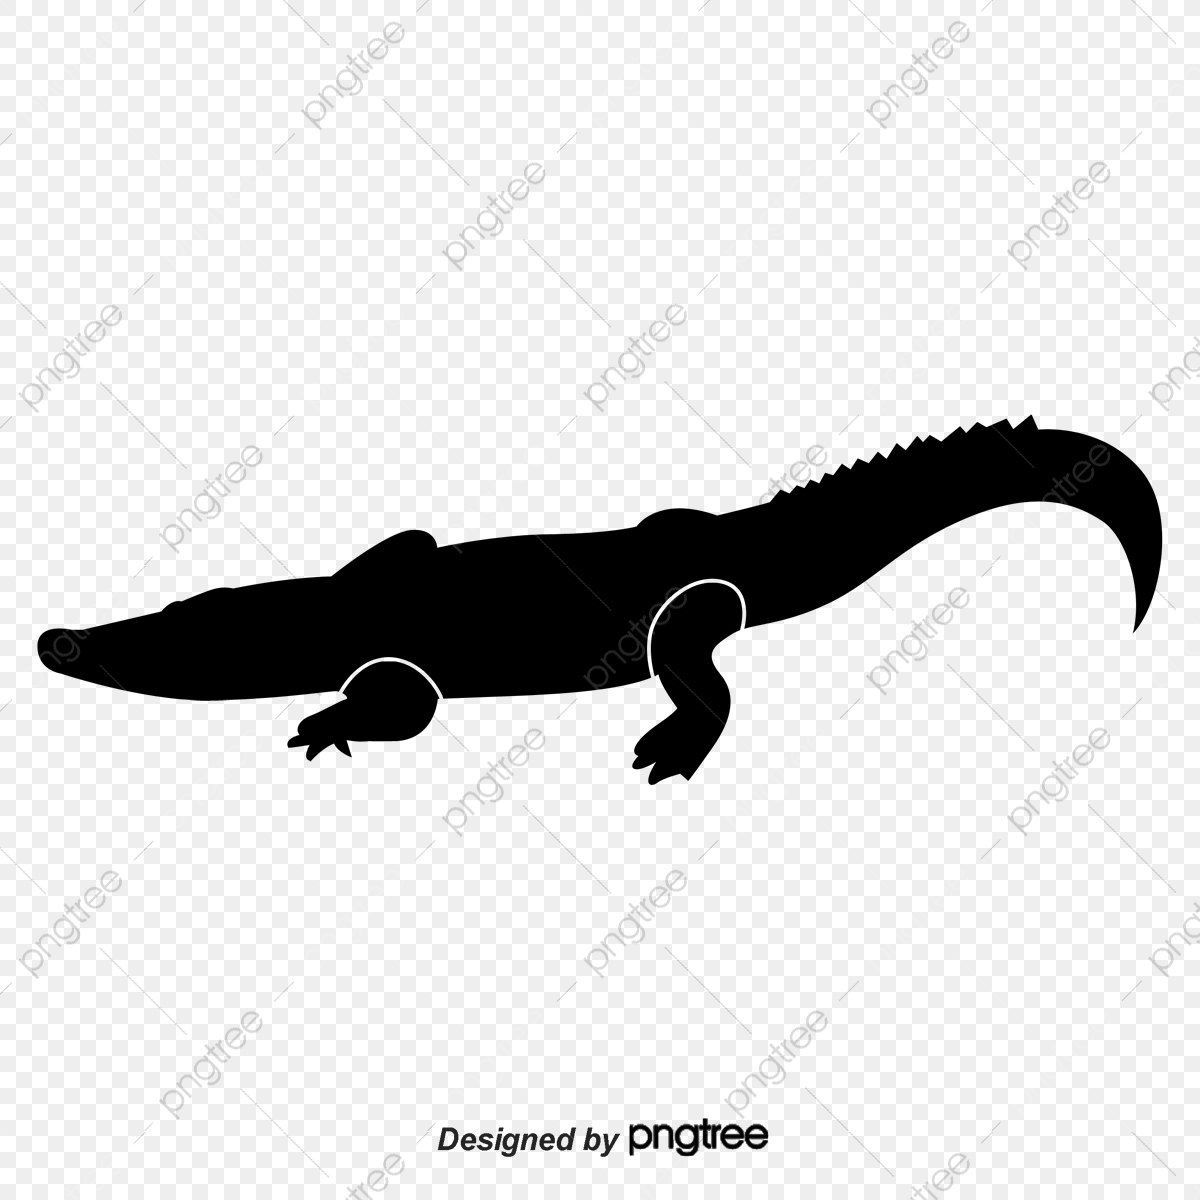 Crocodile Silhouette, Crocodile, Sketch, Crocodile Vector PNG.